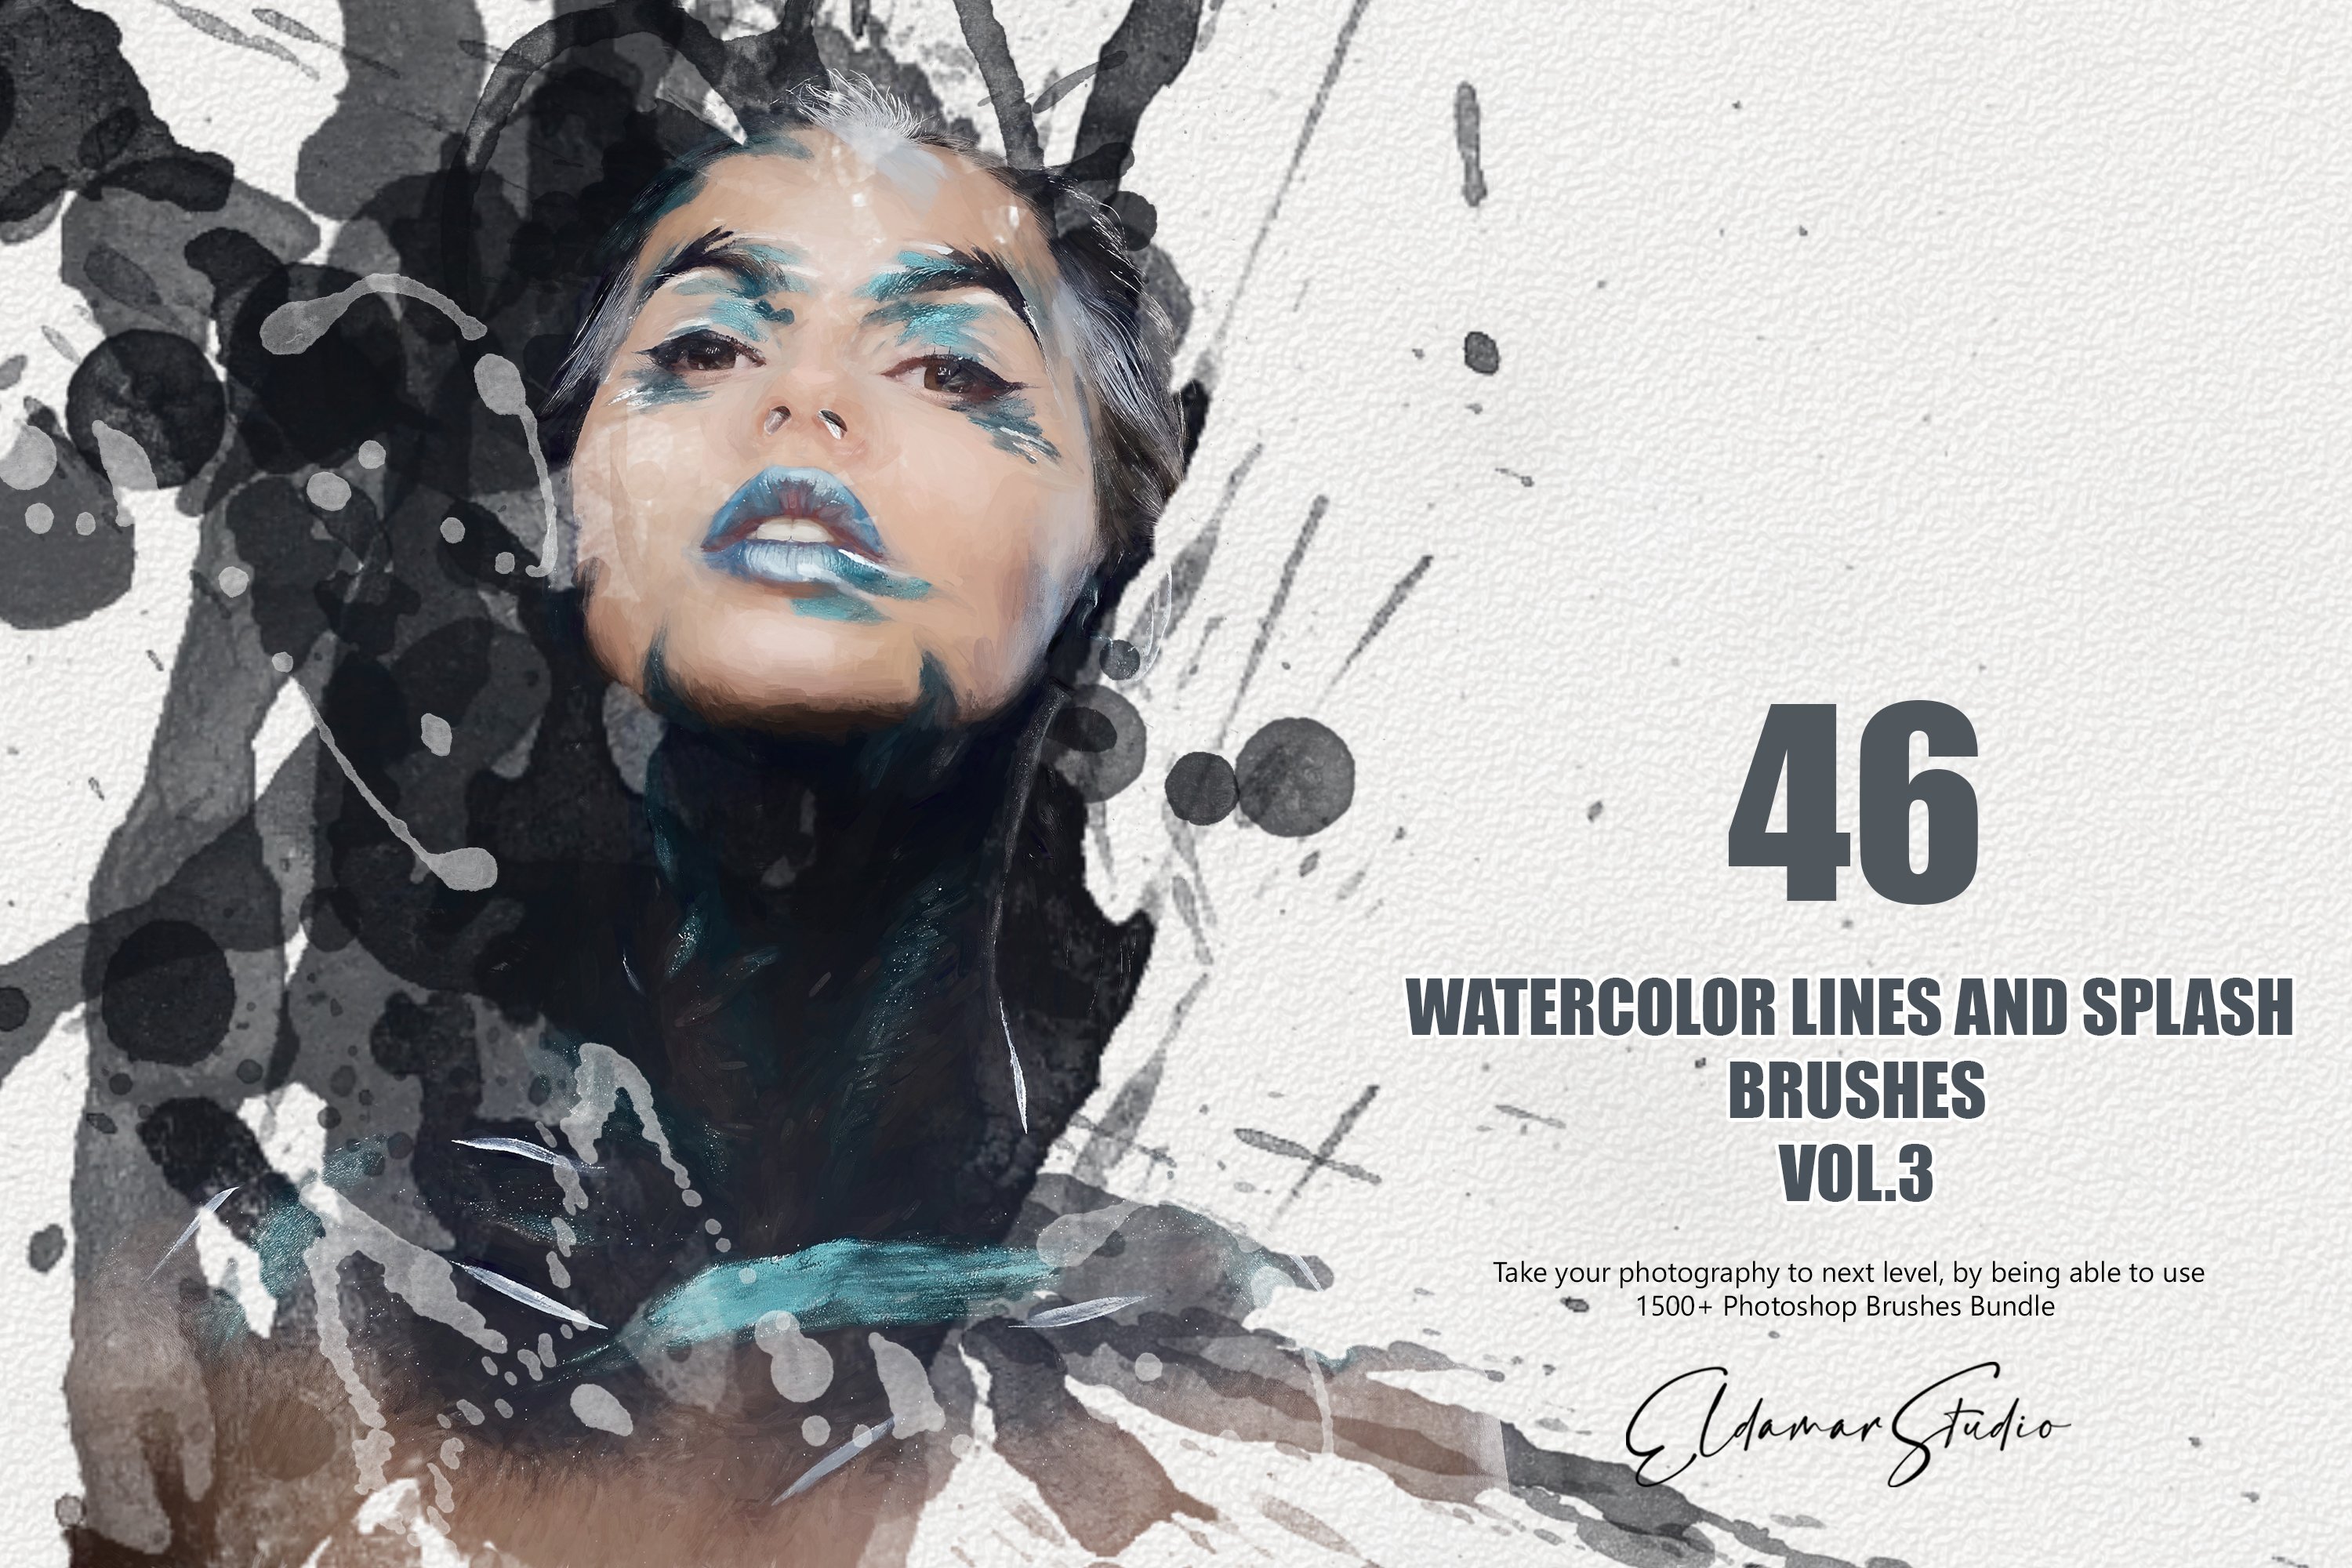 46 Watercolor Splash Brushes - Vol.3cover image.